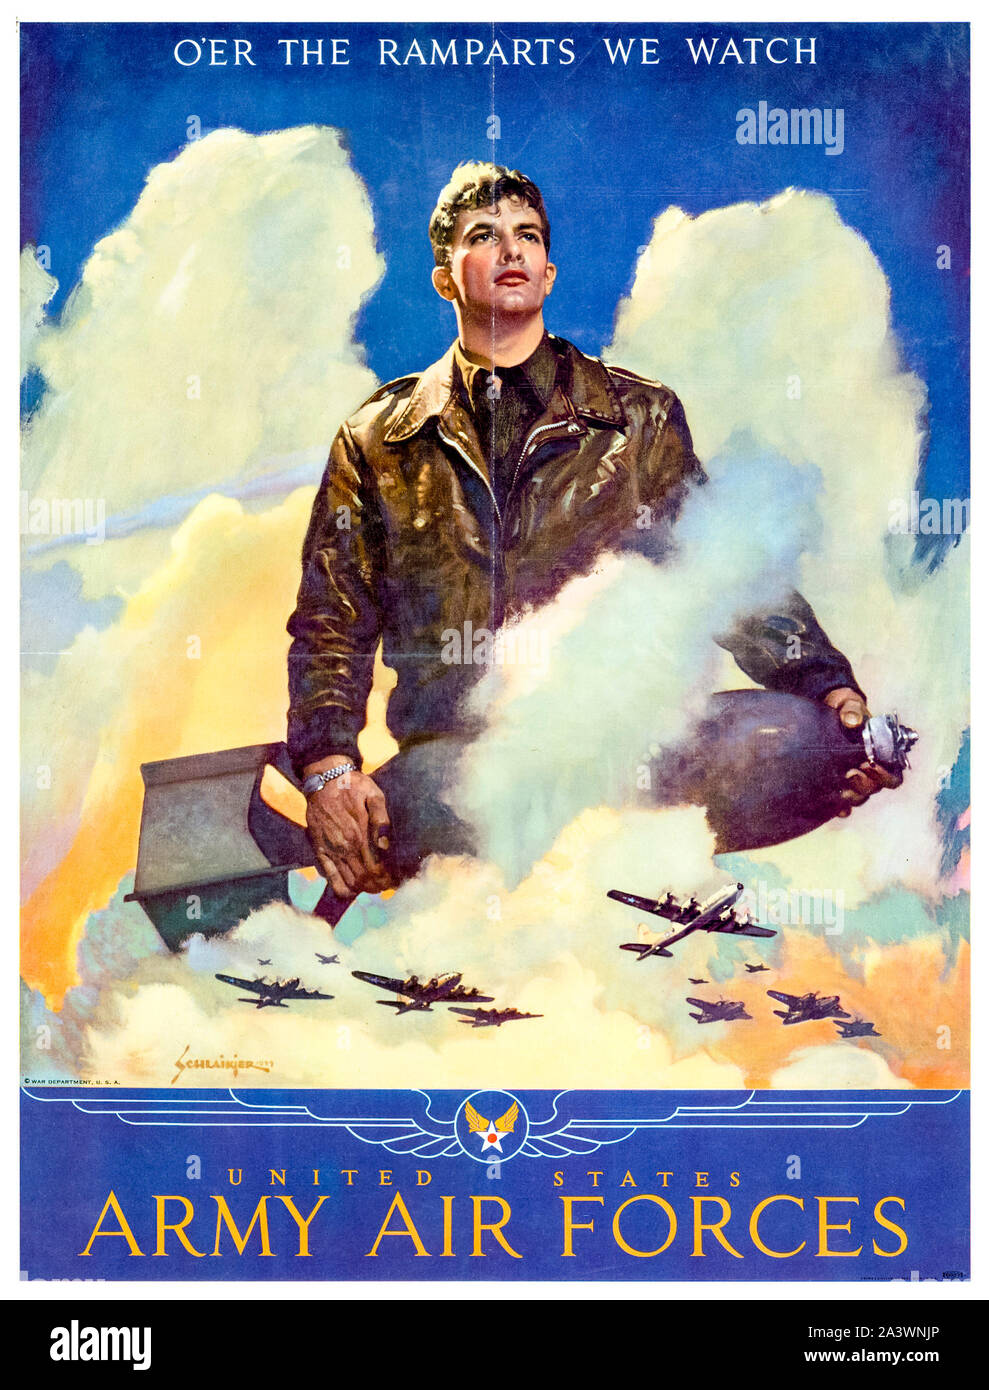 American, USA, WW2, Motivational Poster, O'er die Stadtmauer wir aufpassen, United States Army Air Forces (Airman mit Bombe), 1941-1945 Stockfoto